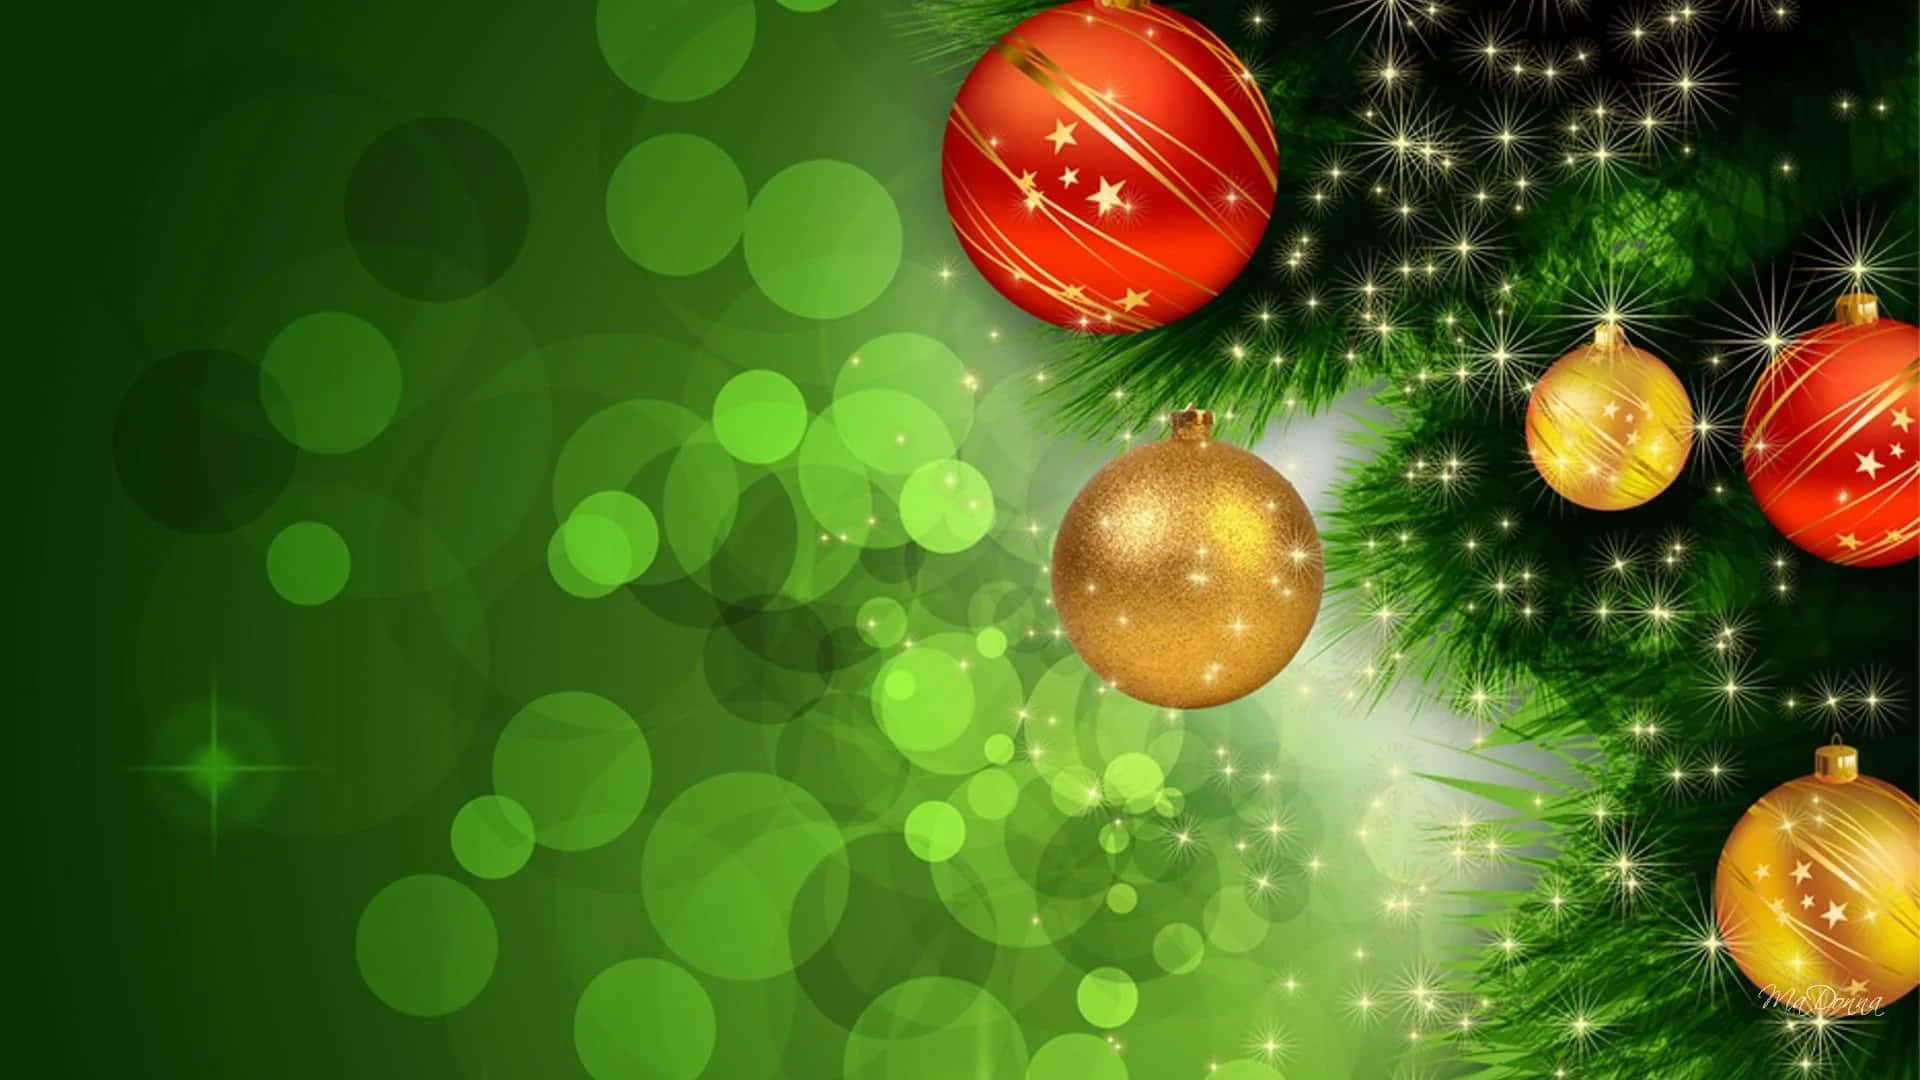 Celebrate the holiday season with a festive dark green Christmas theme. Wallpaper